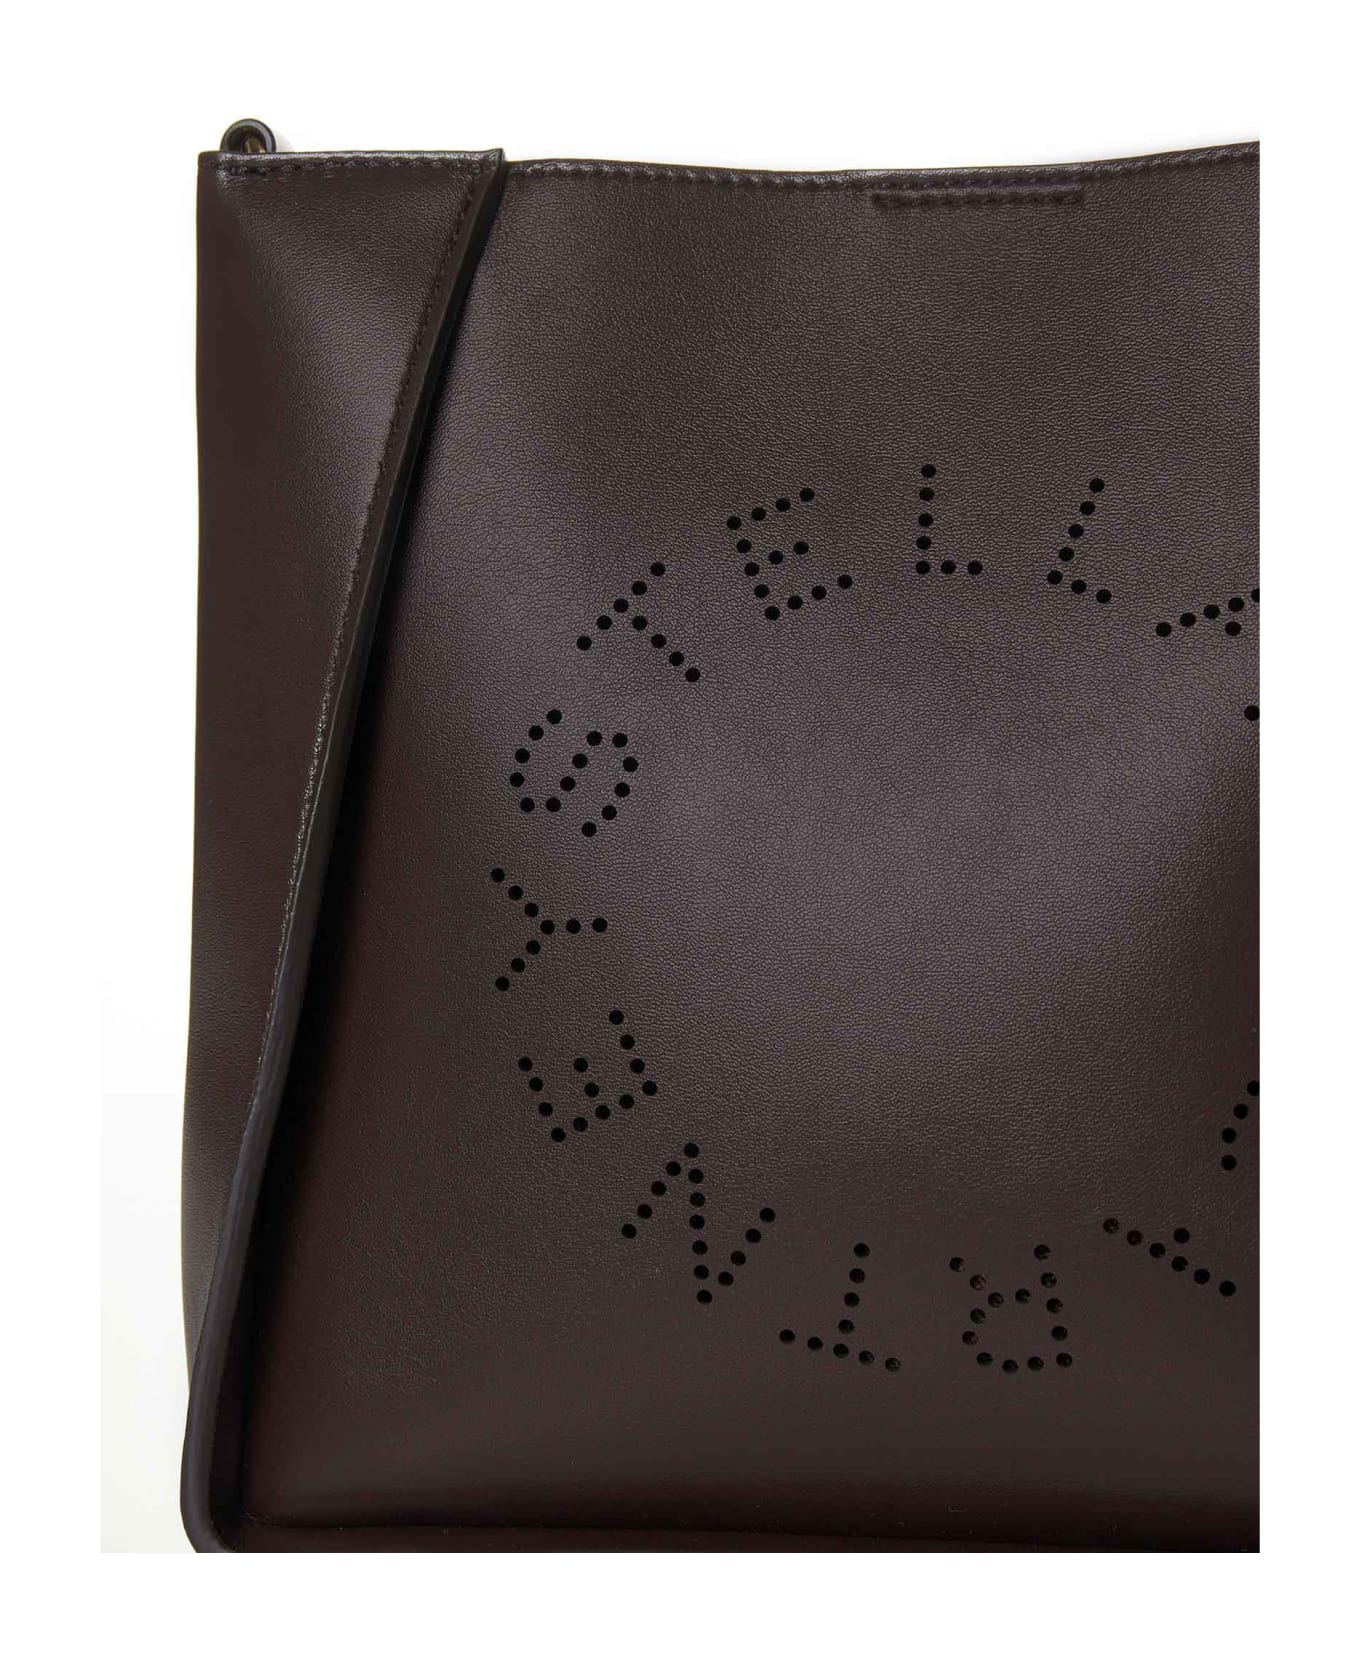 Stella McCartney Crossbody Bag - Chocolate Brown ショルダーバッグ